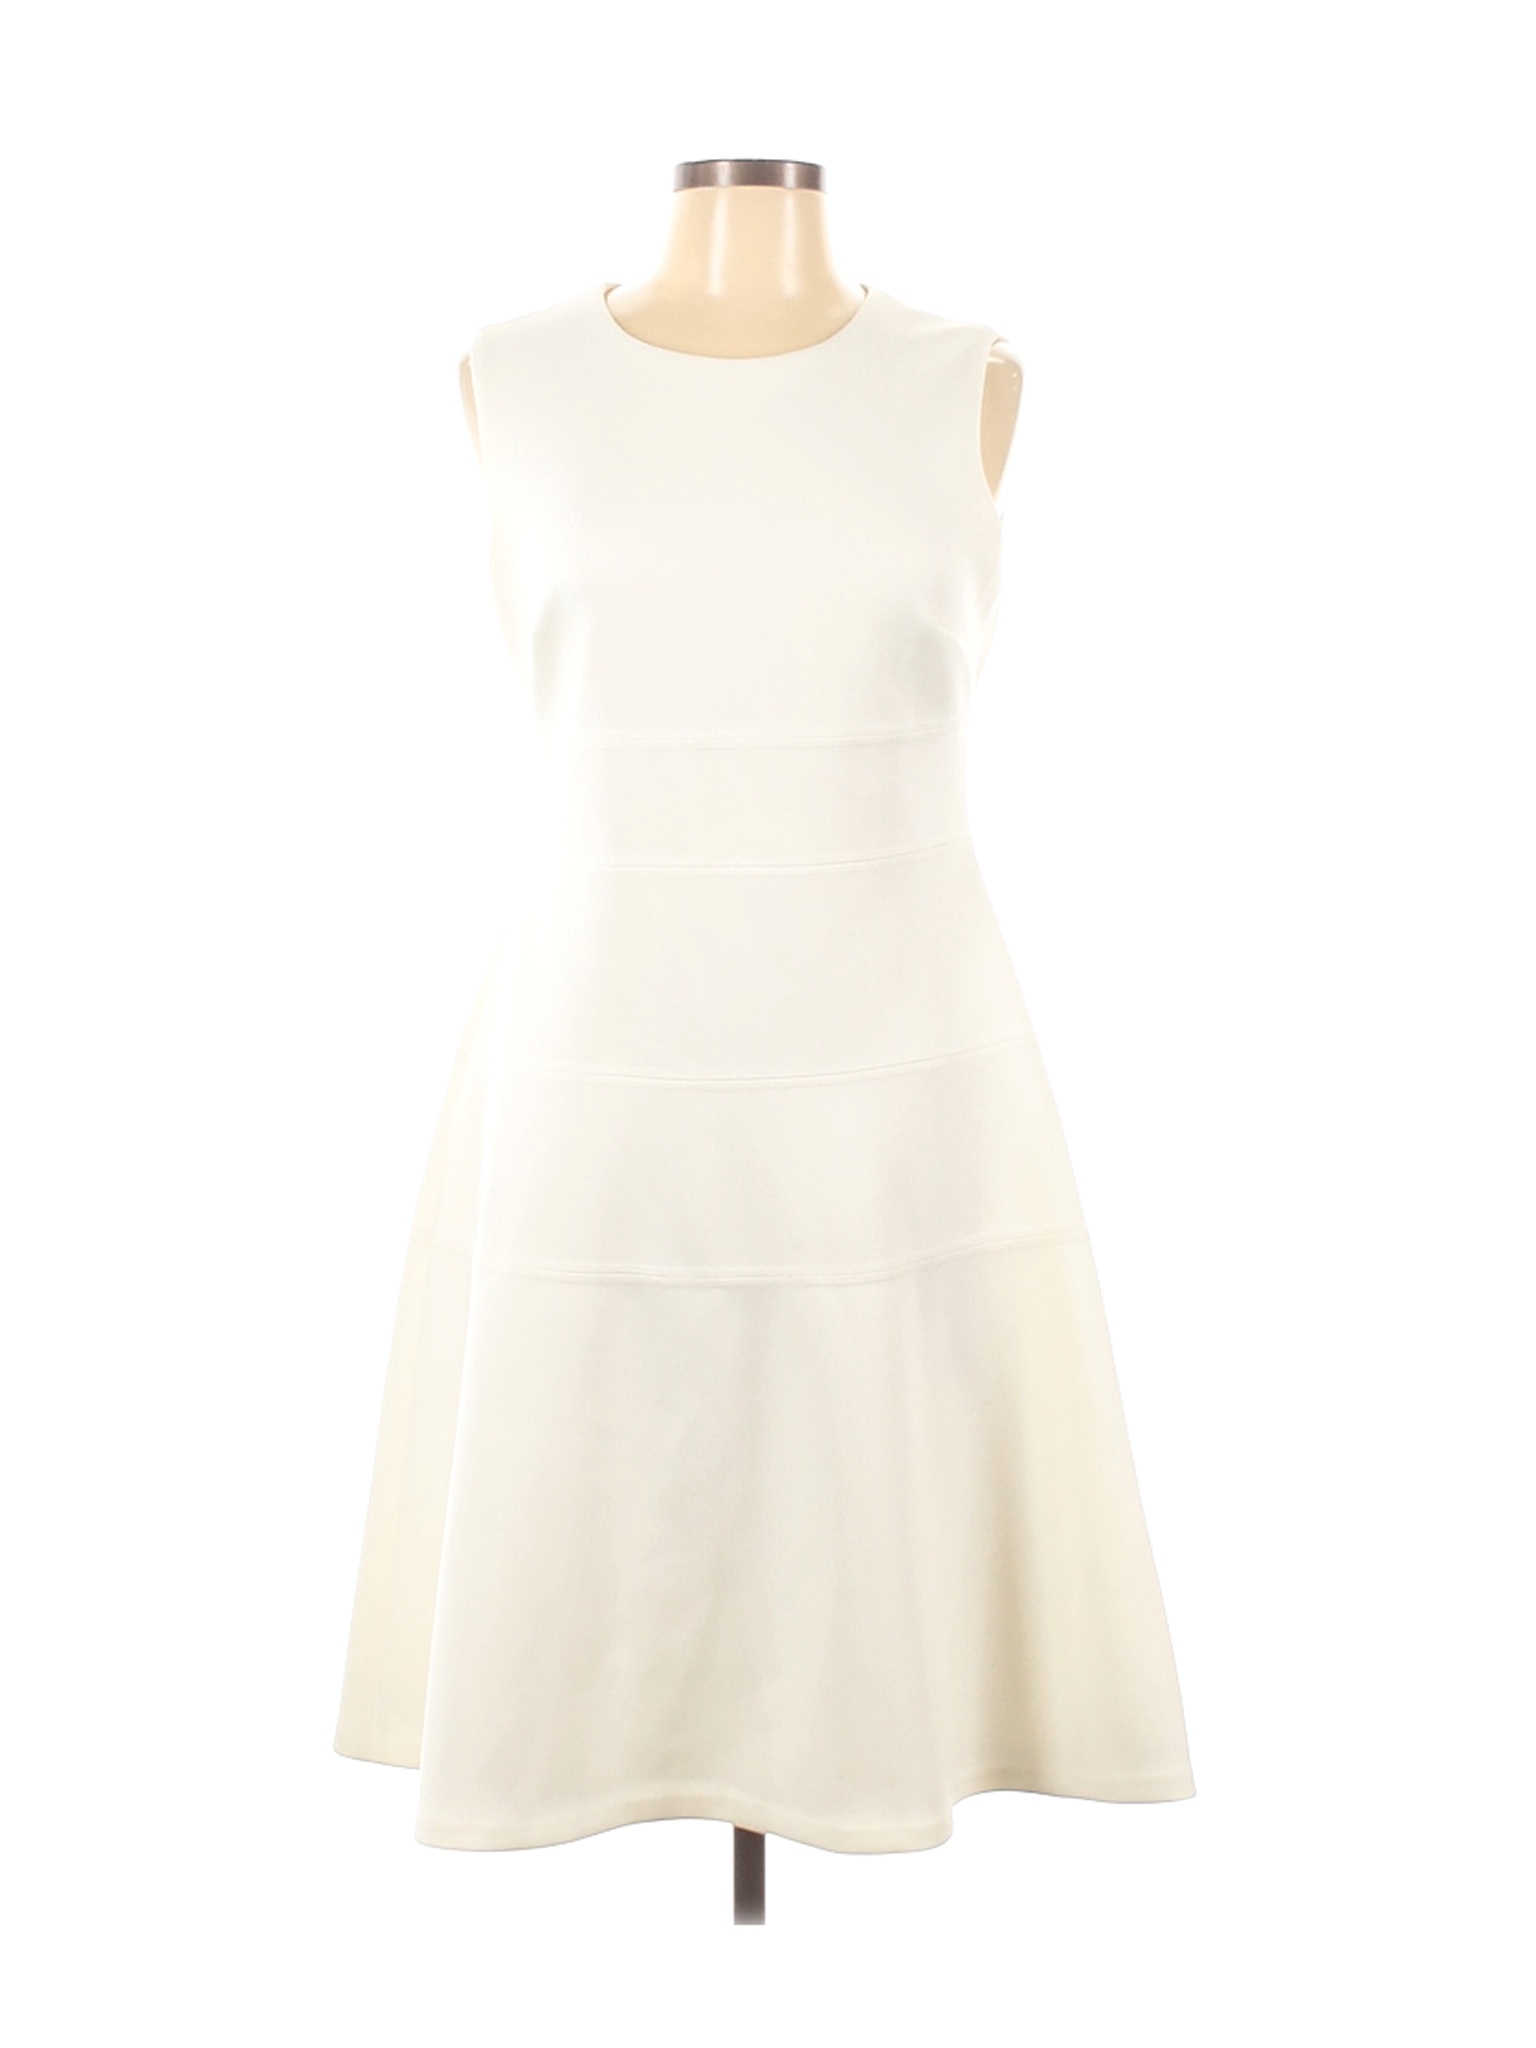 Calvin Klein Women White Cocktail Dress 10 | eBay